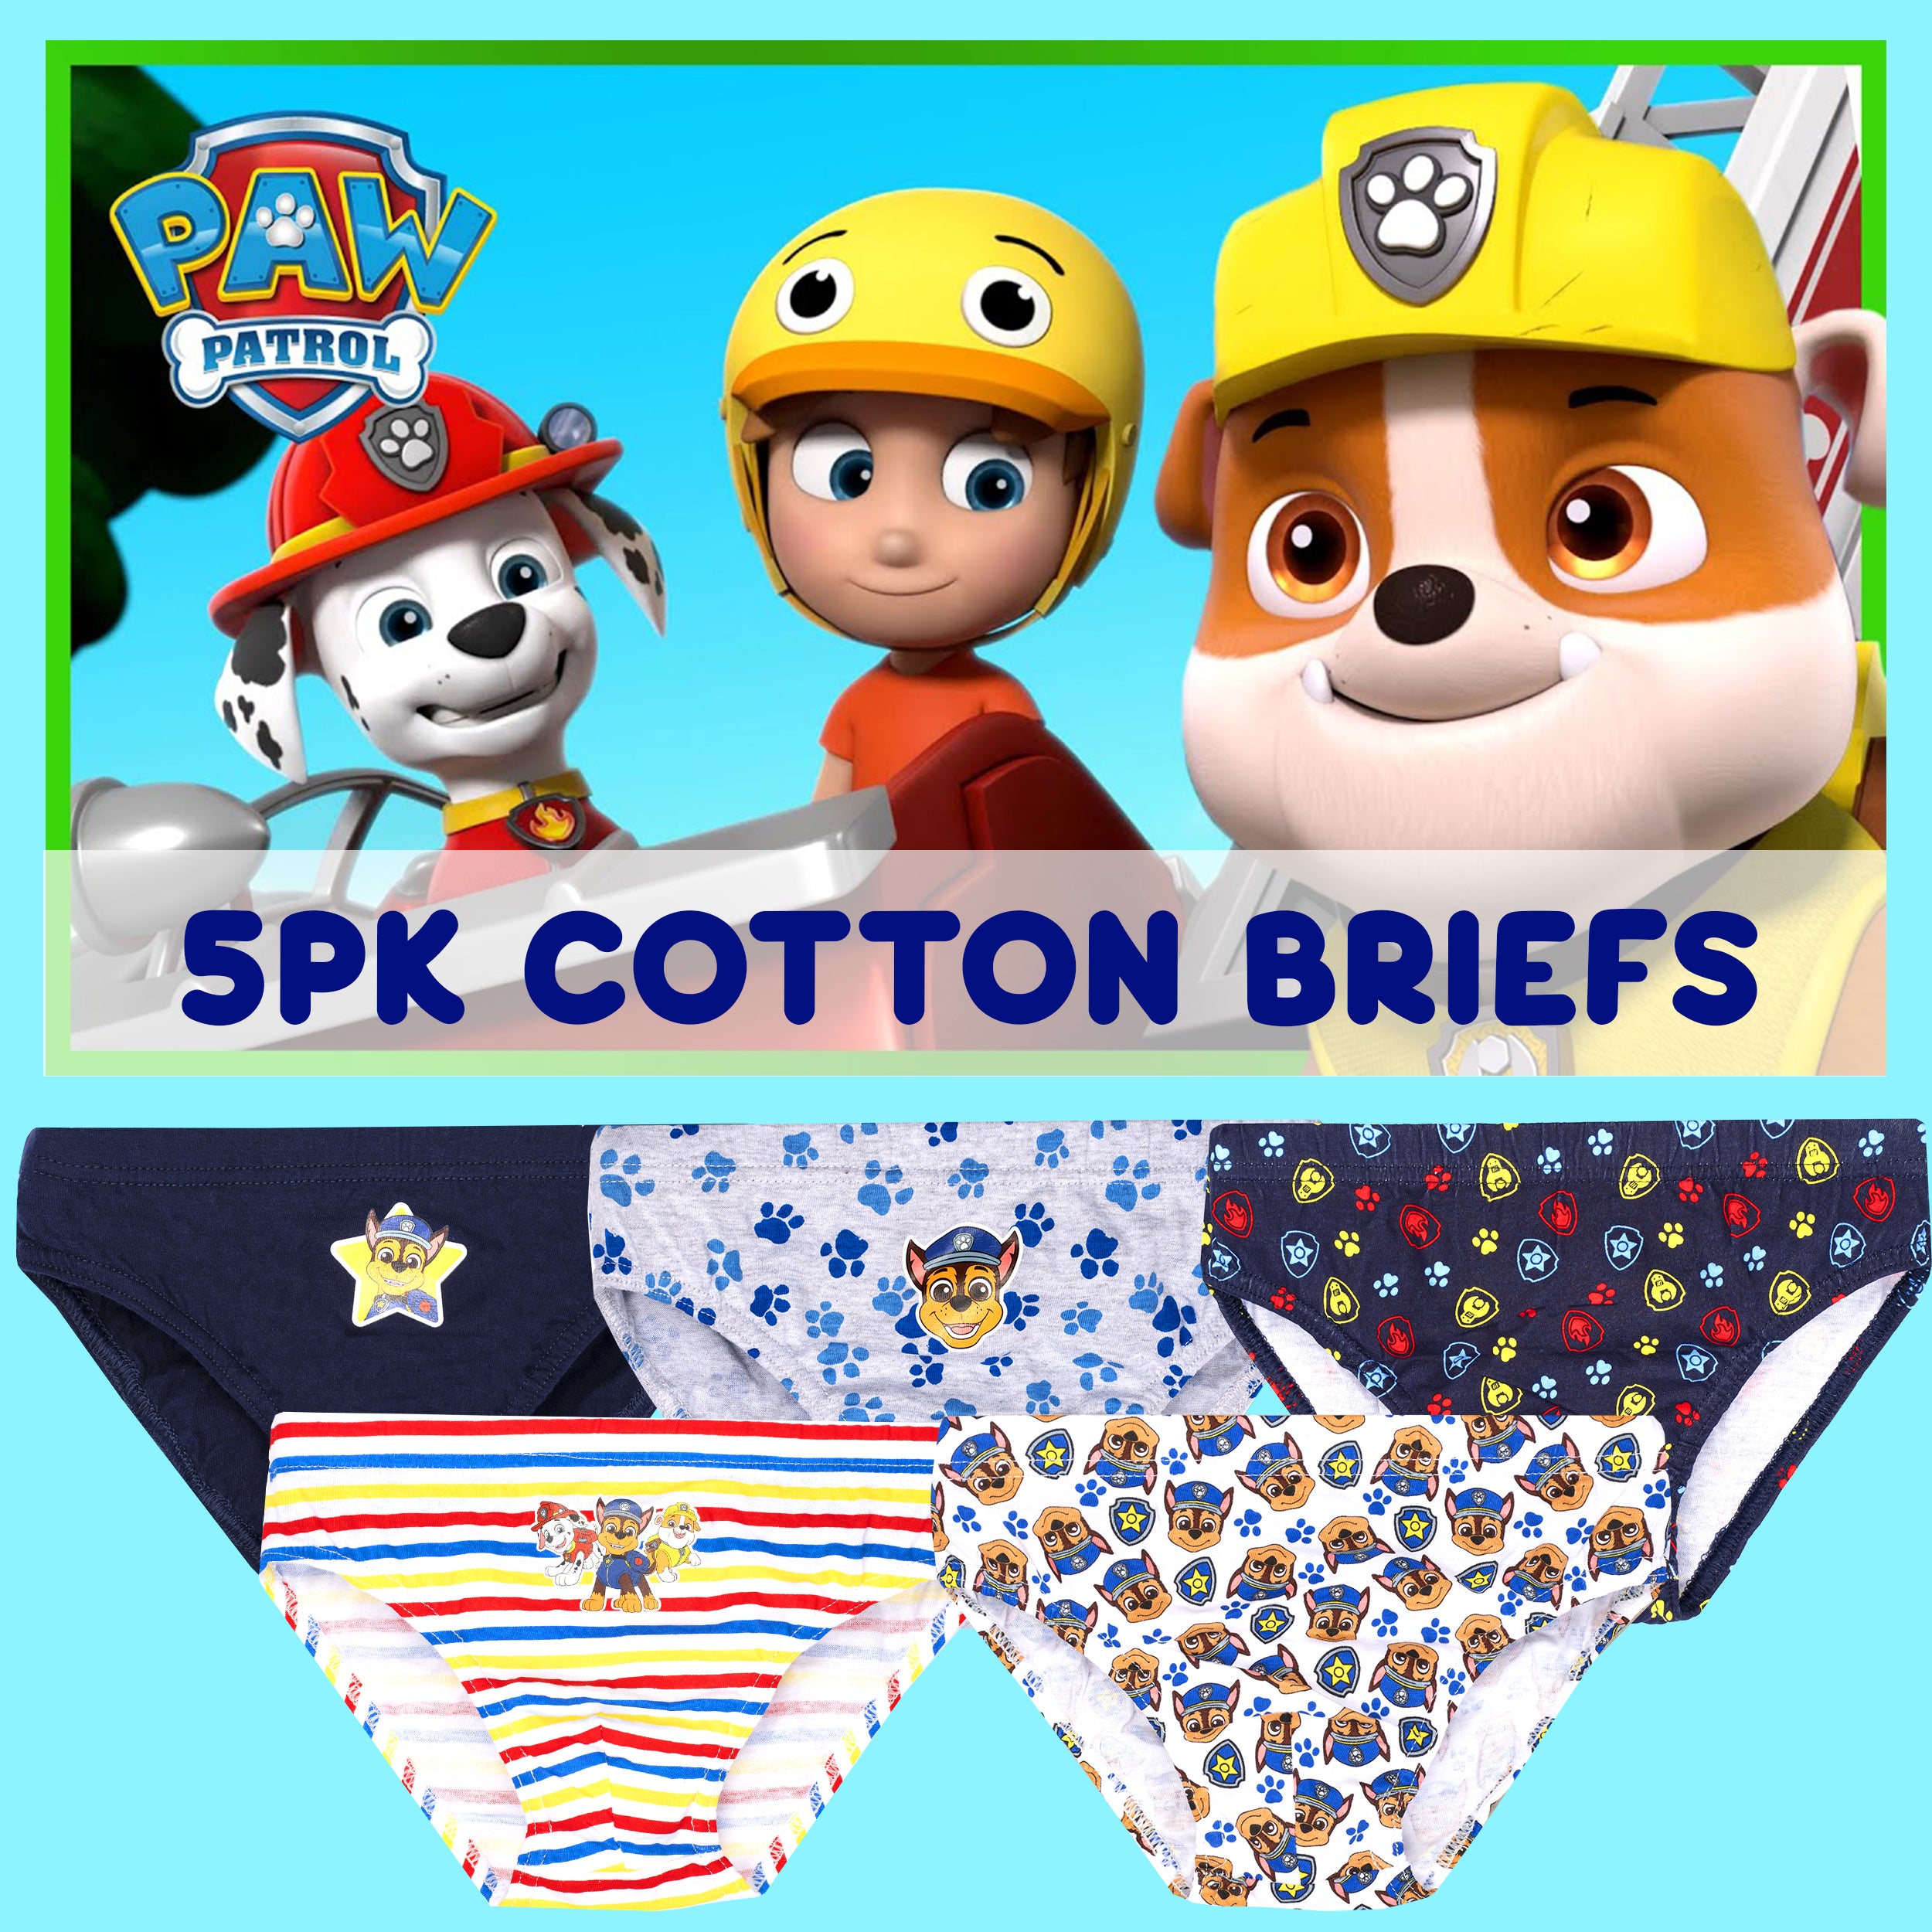 Boys Kids Cartoon Character Mario Briefs Knickers Panties